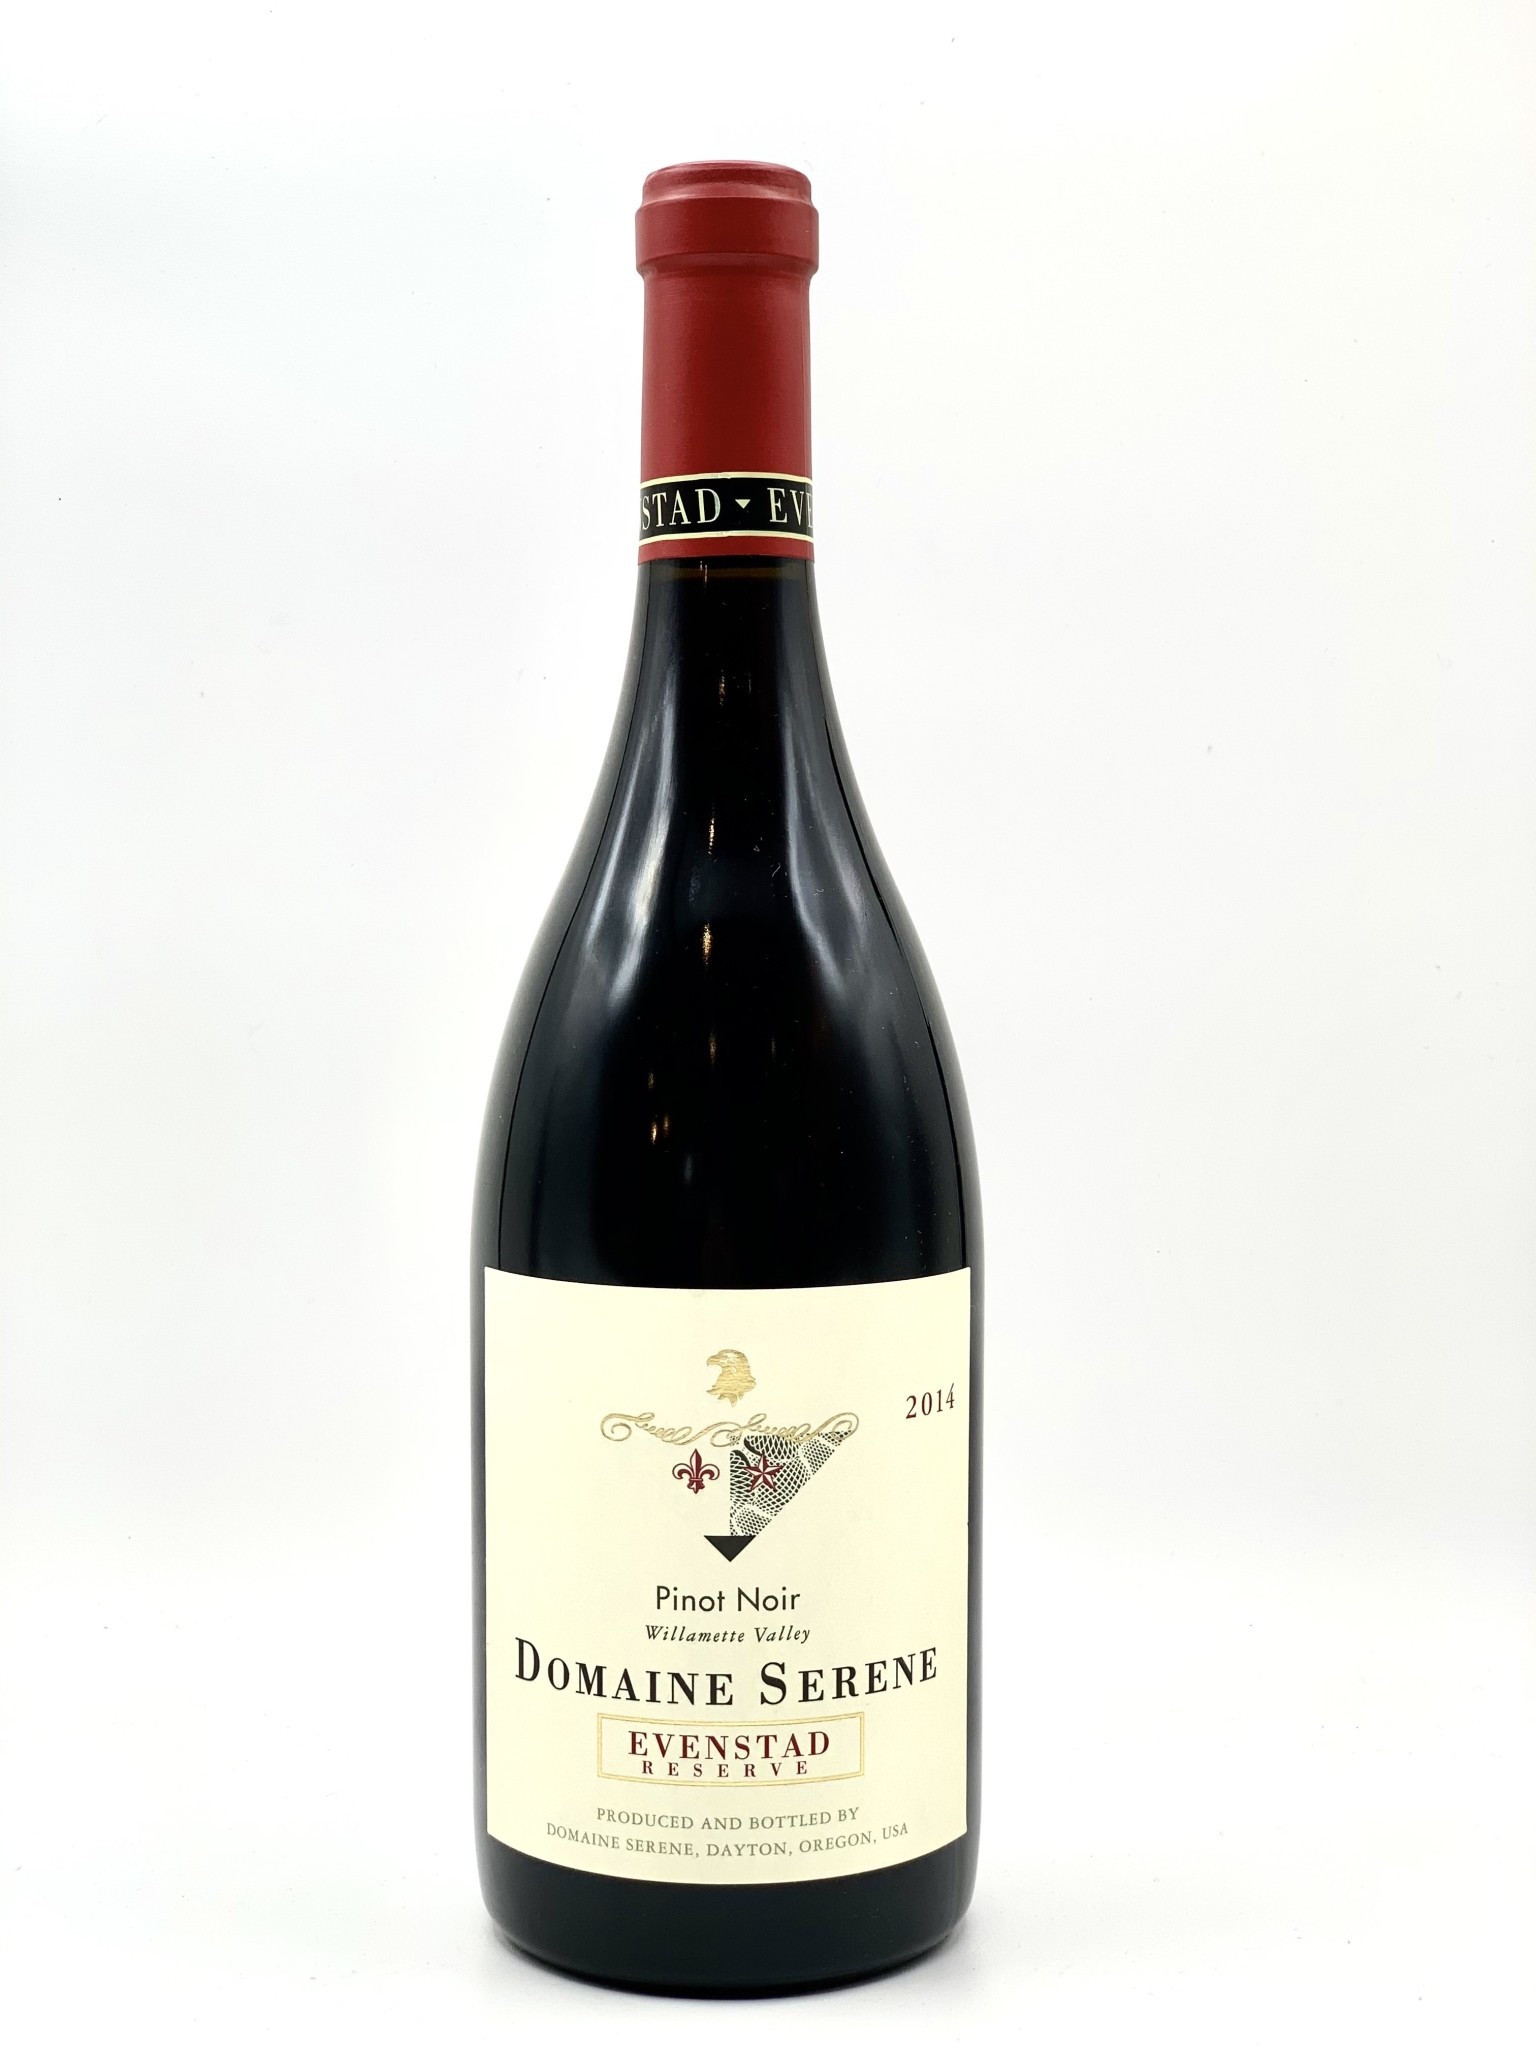 Willamette Valley Pinot Noir  2014 Domaine Serene “Evenstad Reserve” 750ml